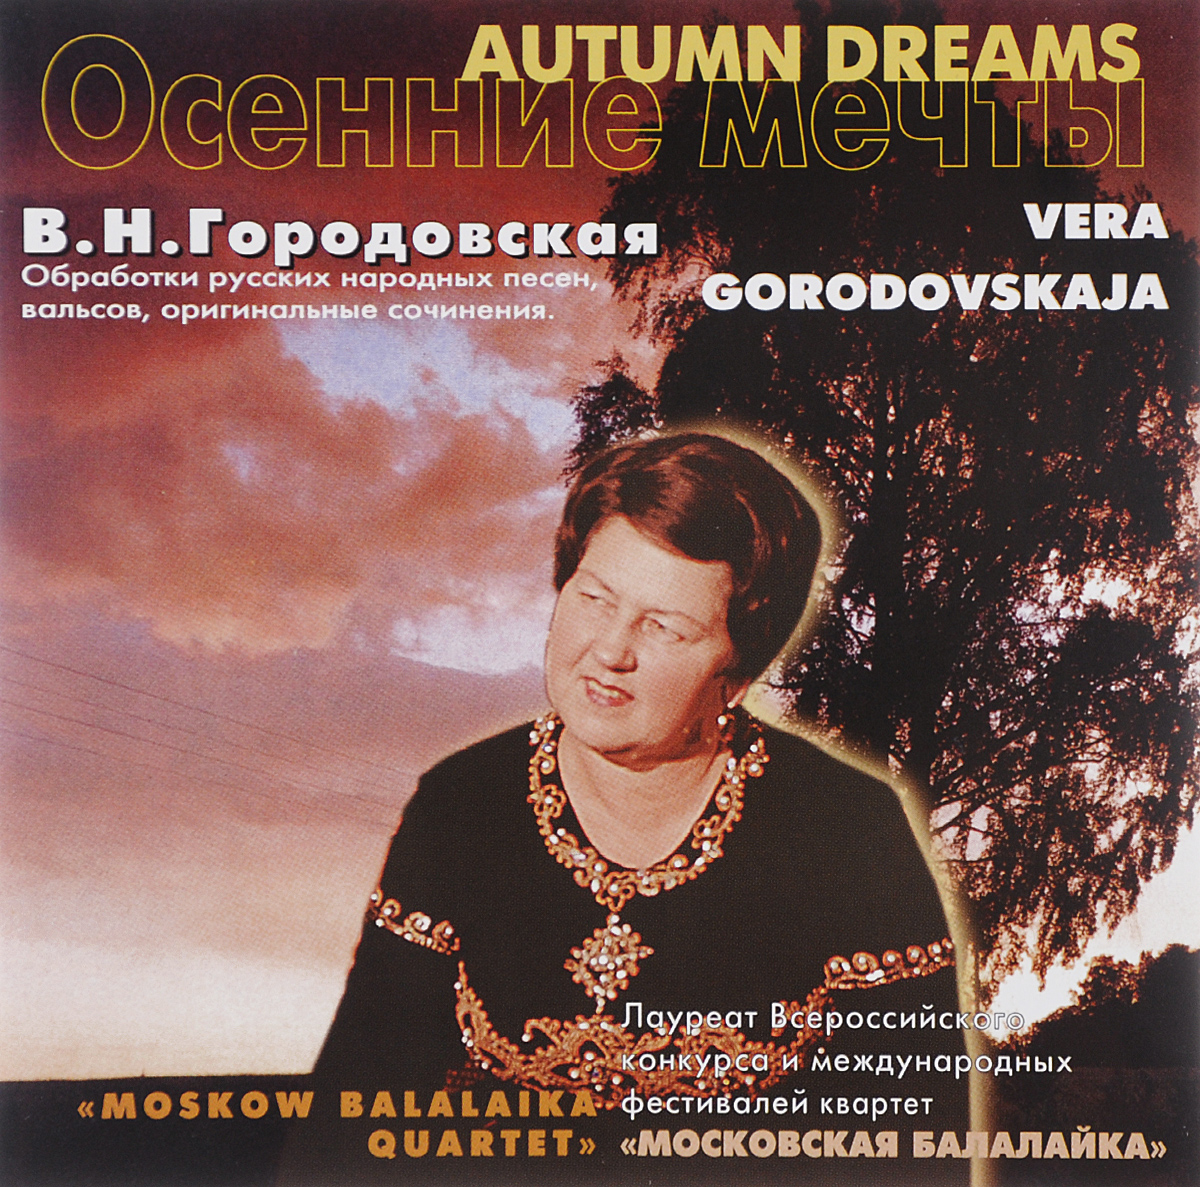 Moskow Balalaika Quartet. Vera Gorodovskaja. Autumn Dreams